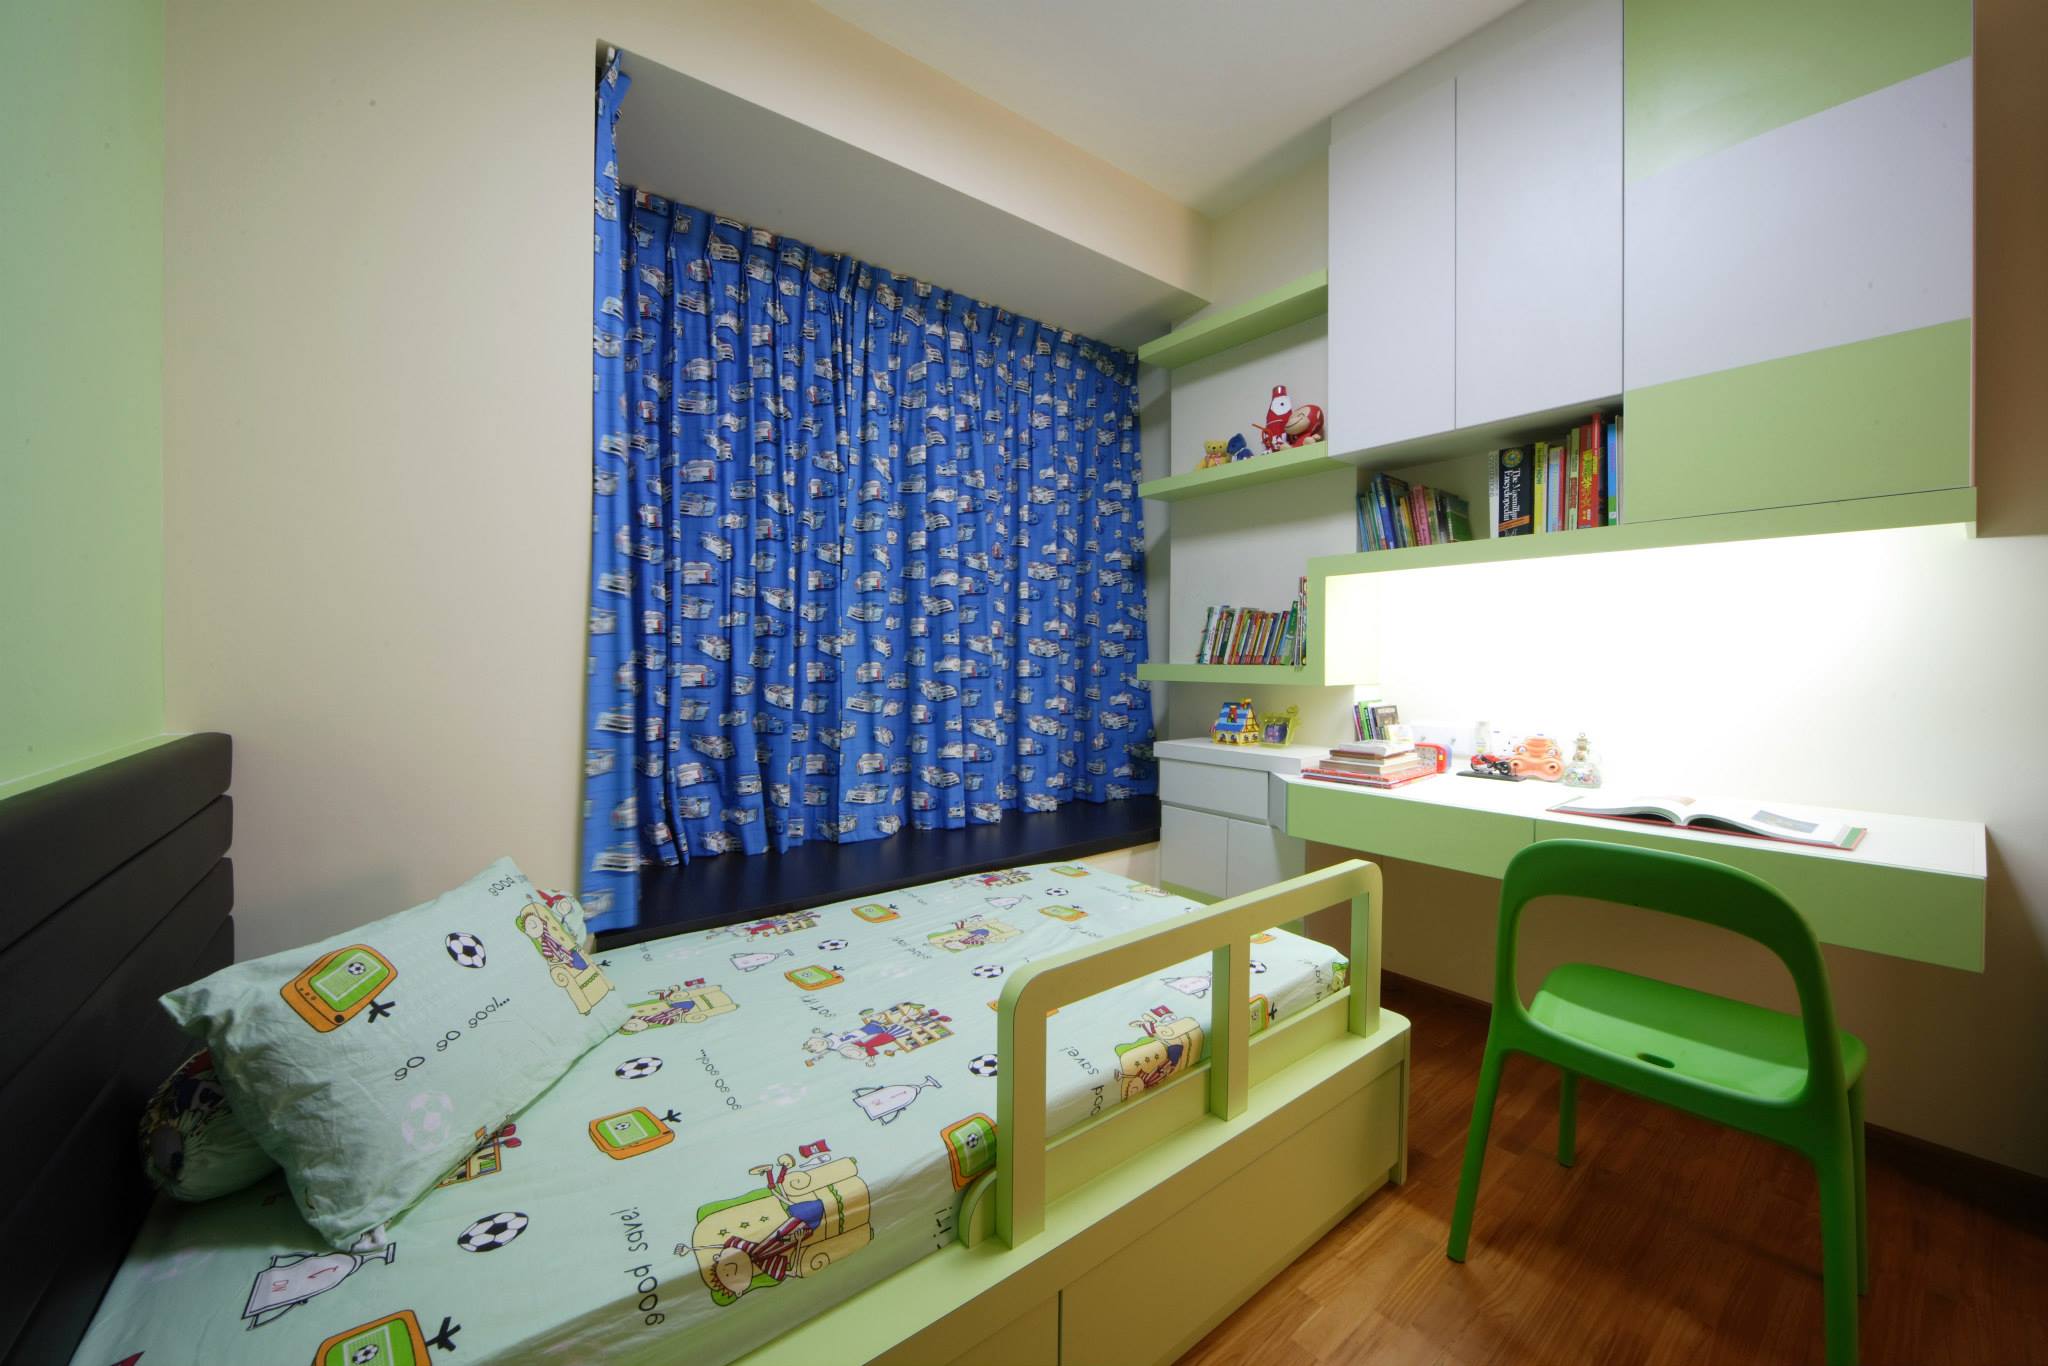 dizajn malenkoj detskoj komnaty 72 - Маленькая детская комната дизайн  ( 70 фото )